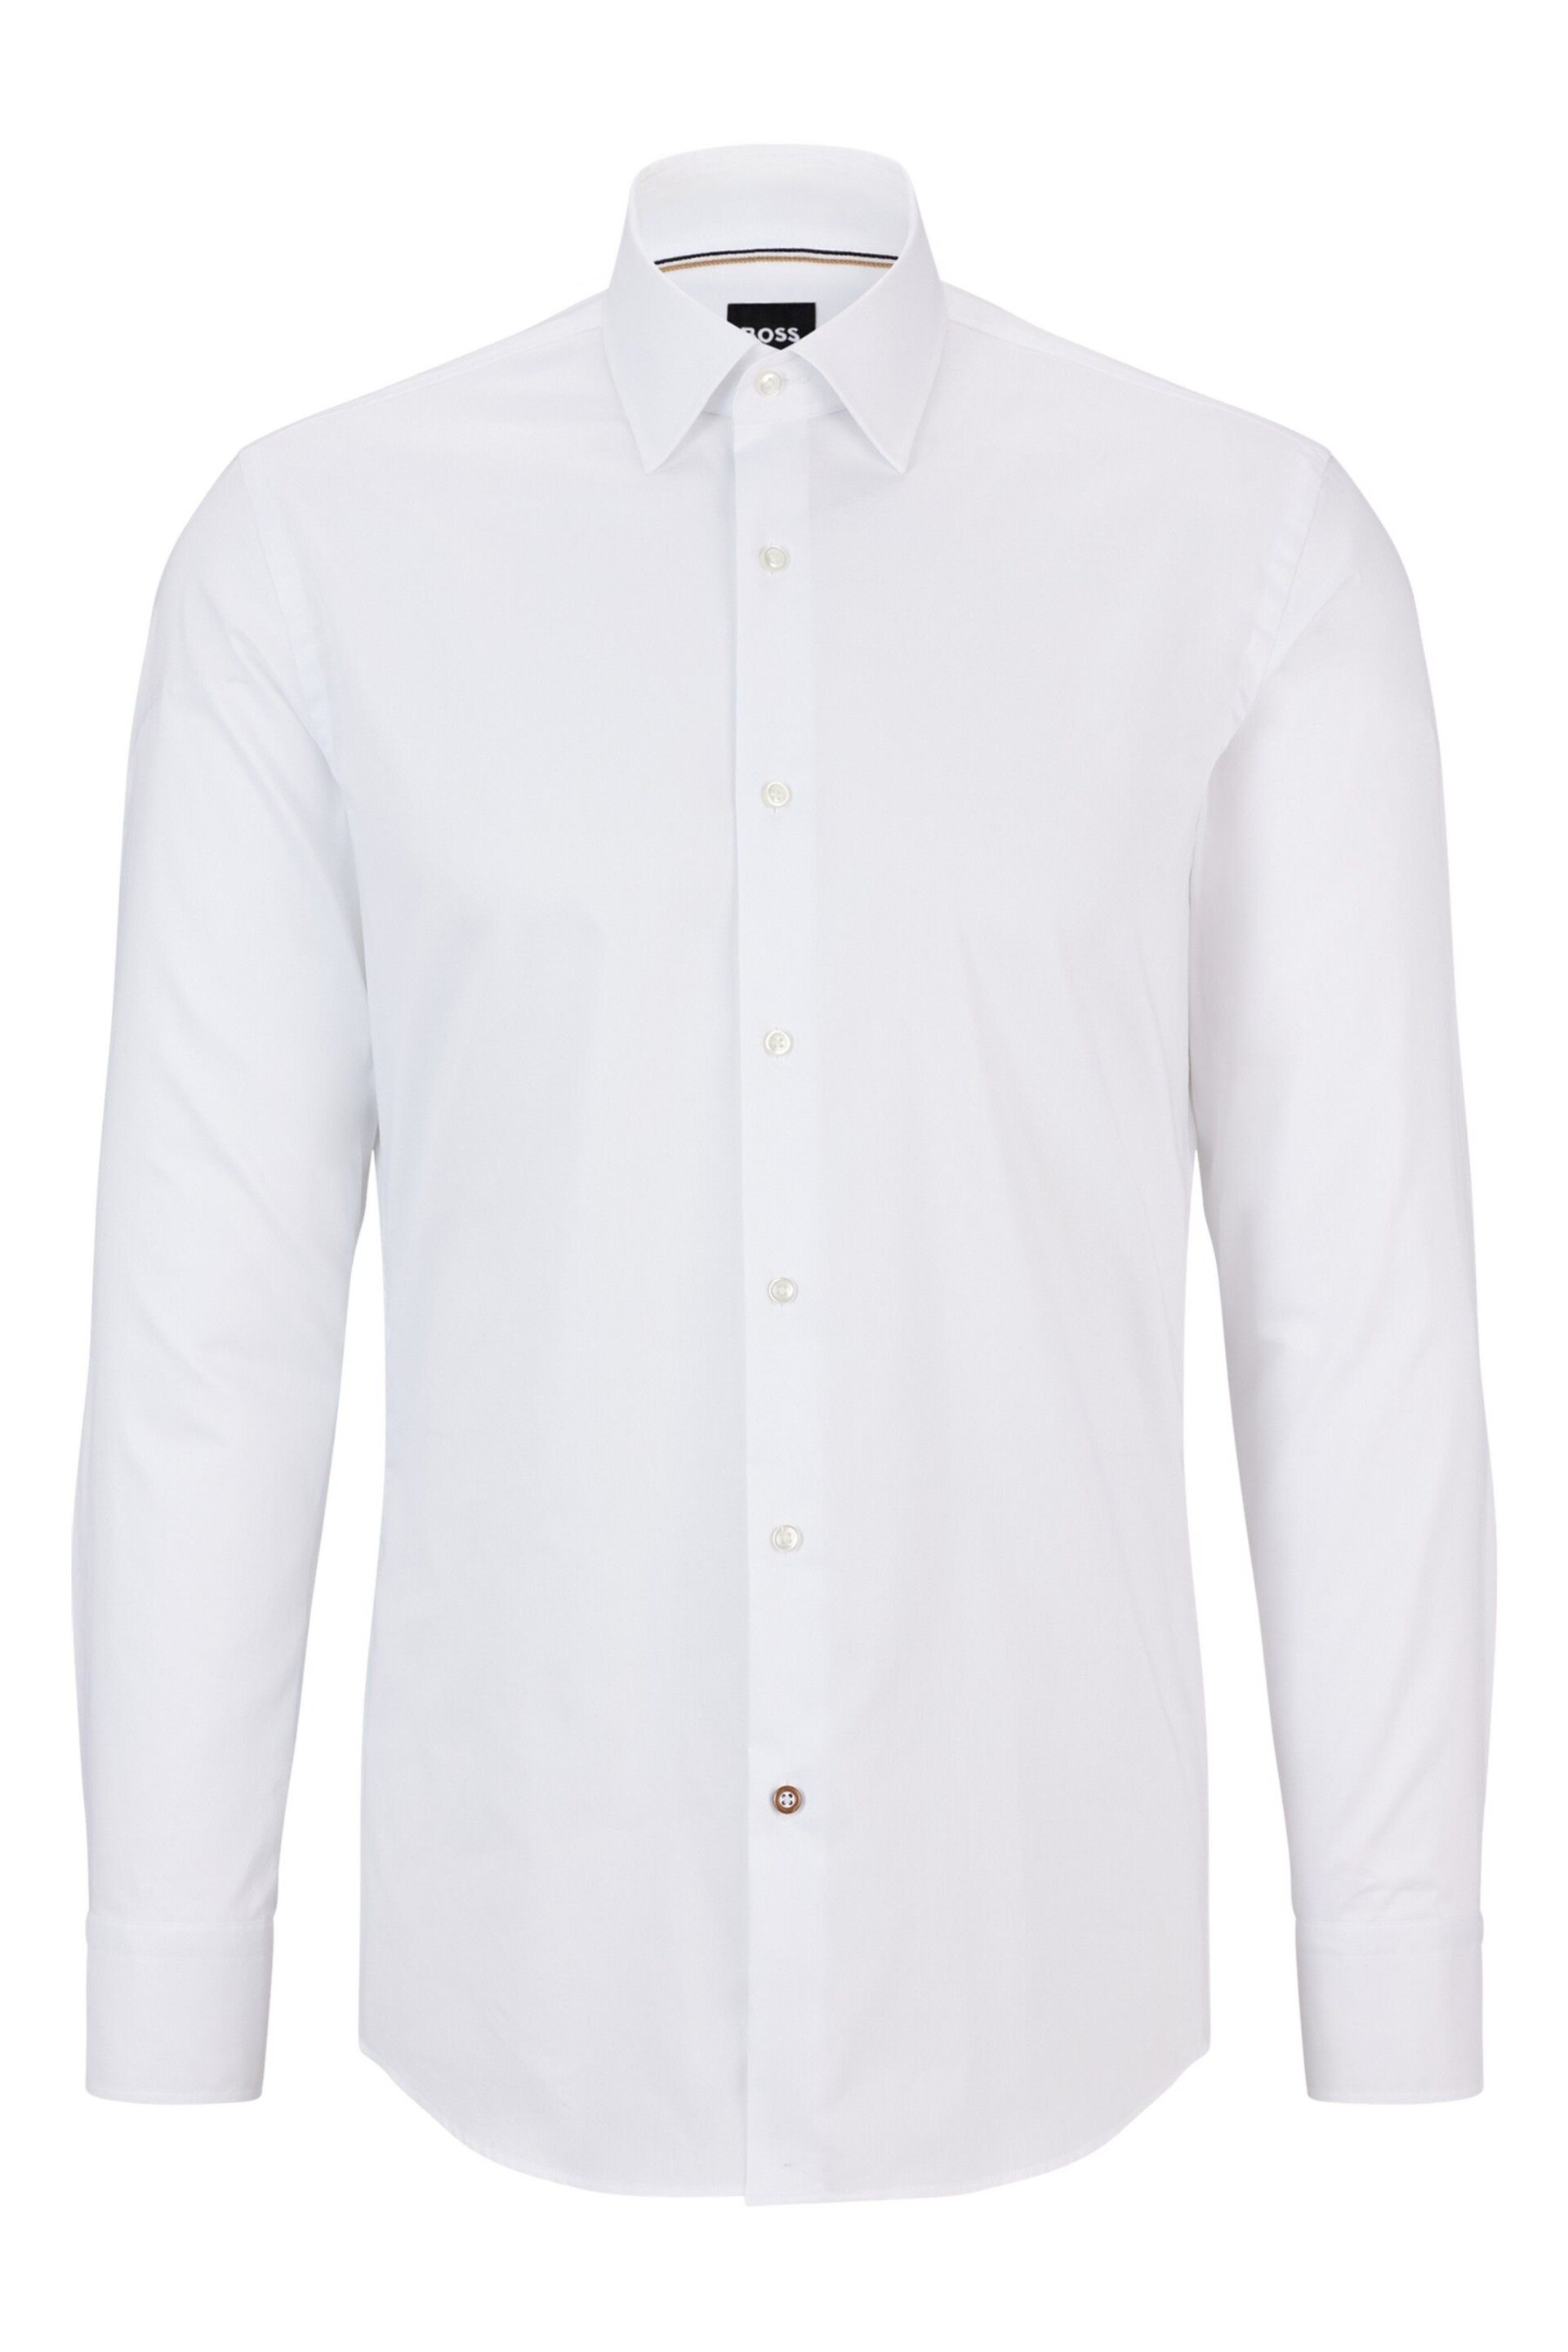 BOSS White Slim Fit Dress Shirt - Image 5 of 5